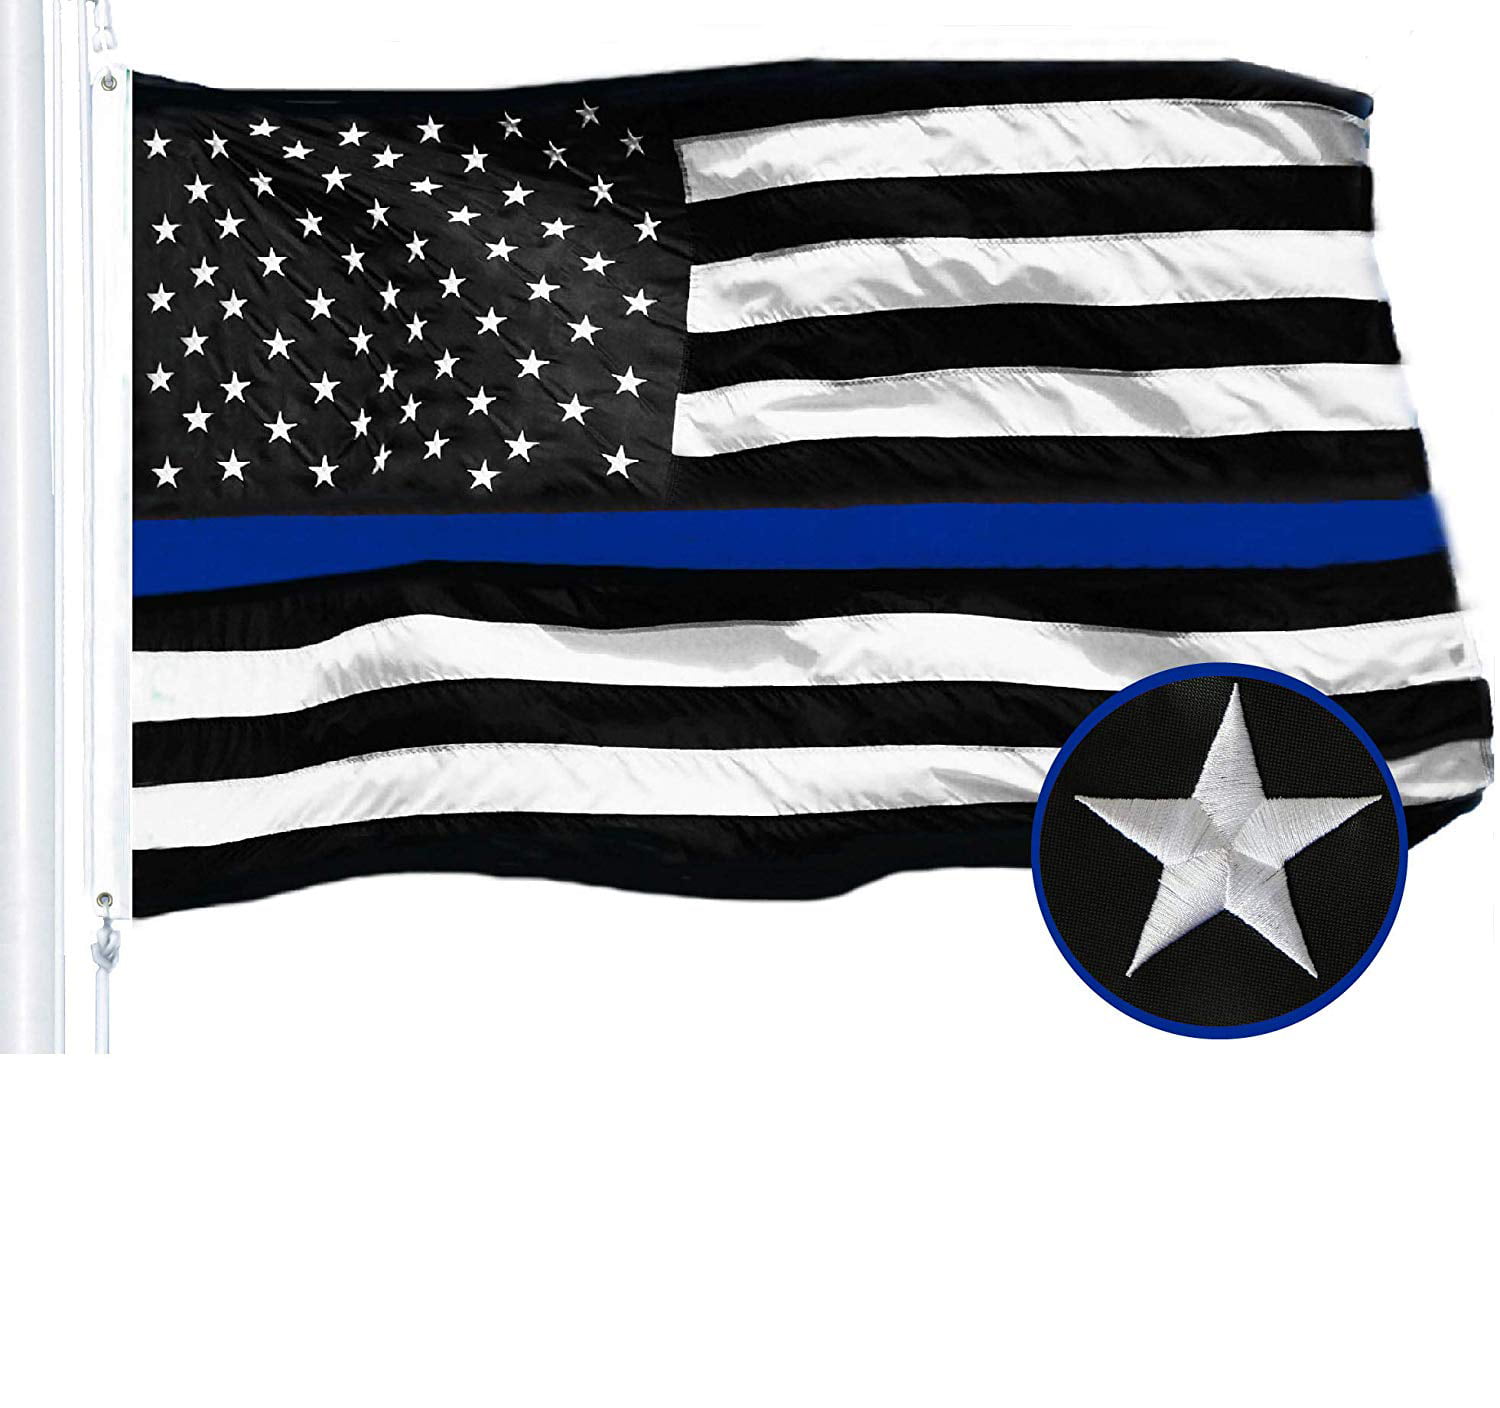 United States America Flag Black and White with Blue Stripe   3' x 5' Flag 